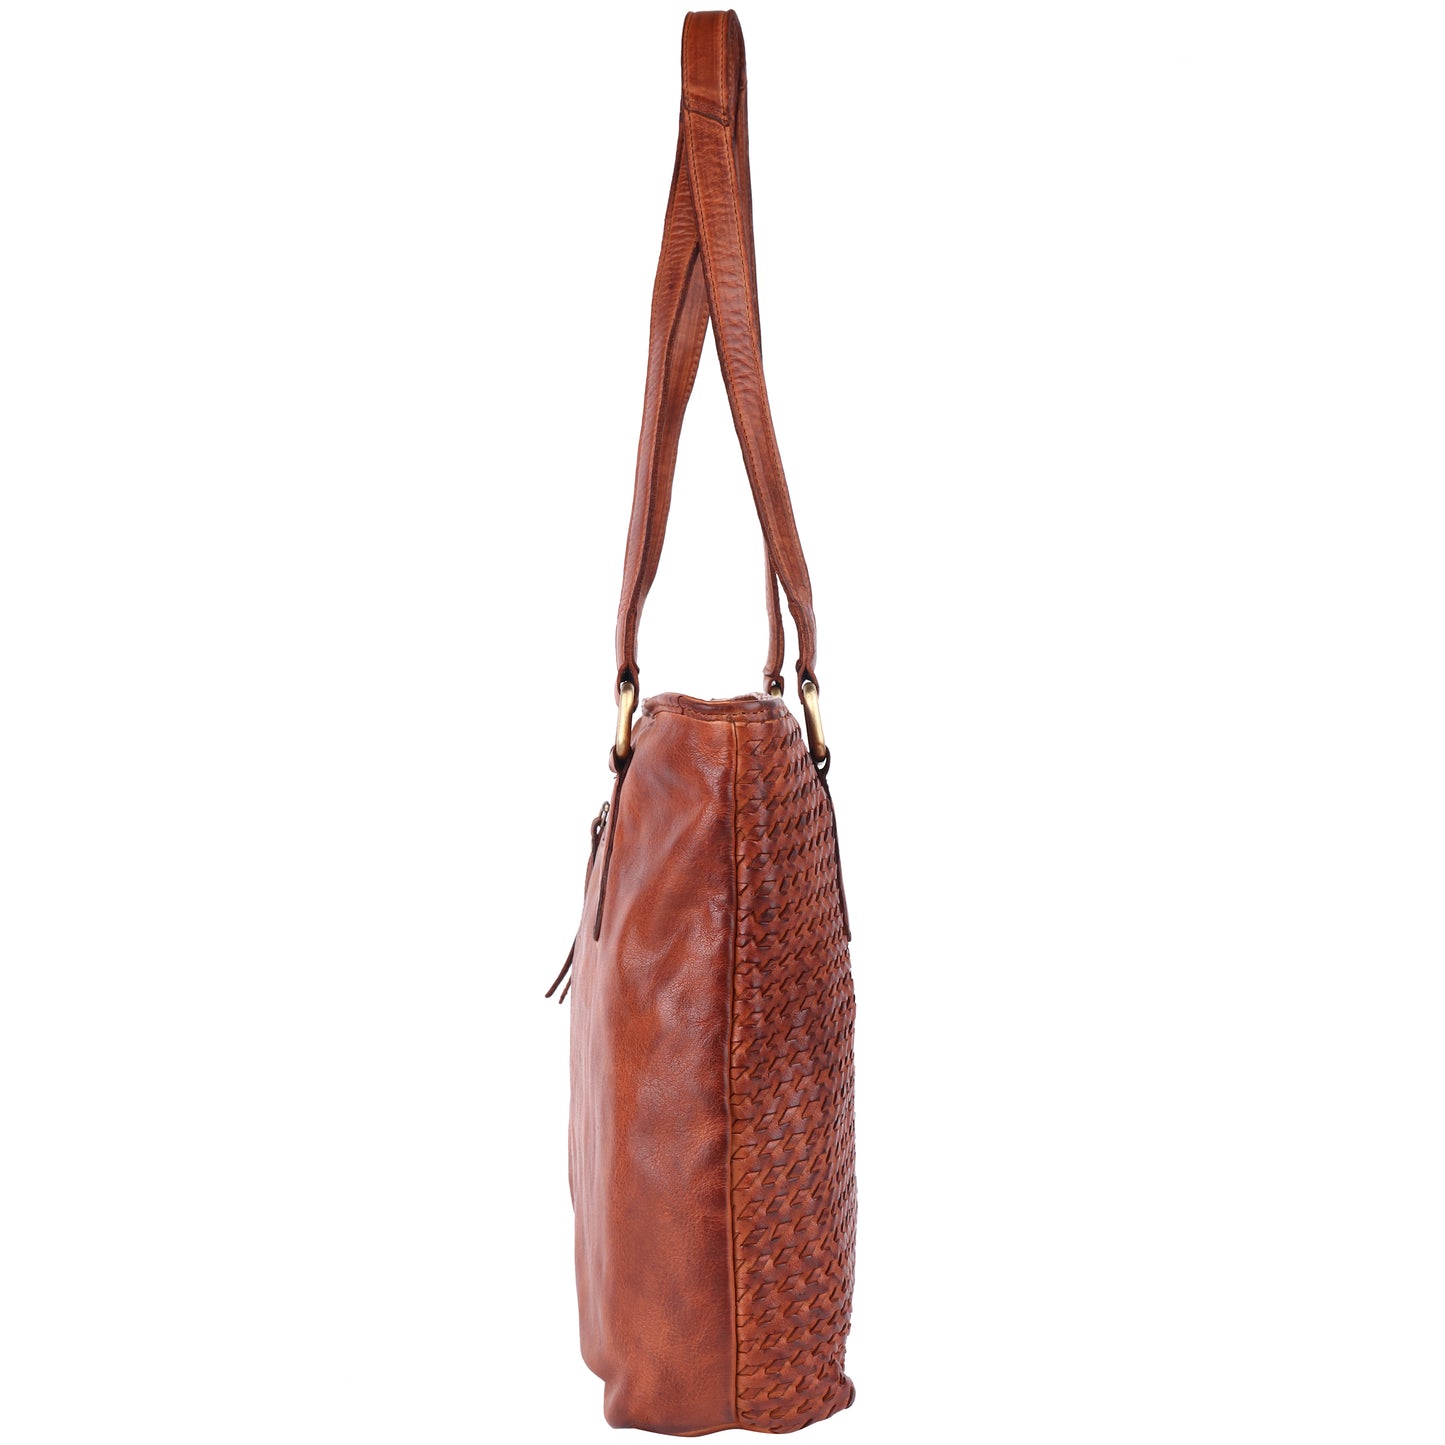 Chantal - The Handbag